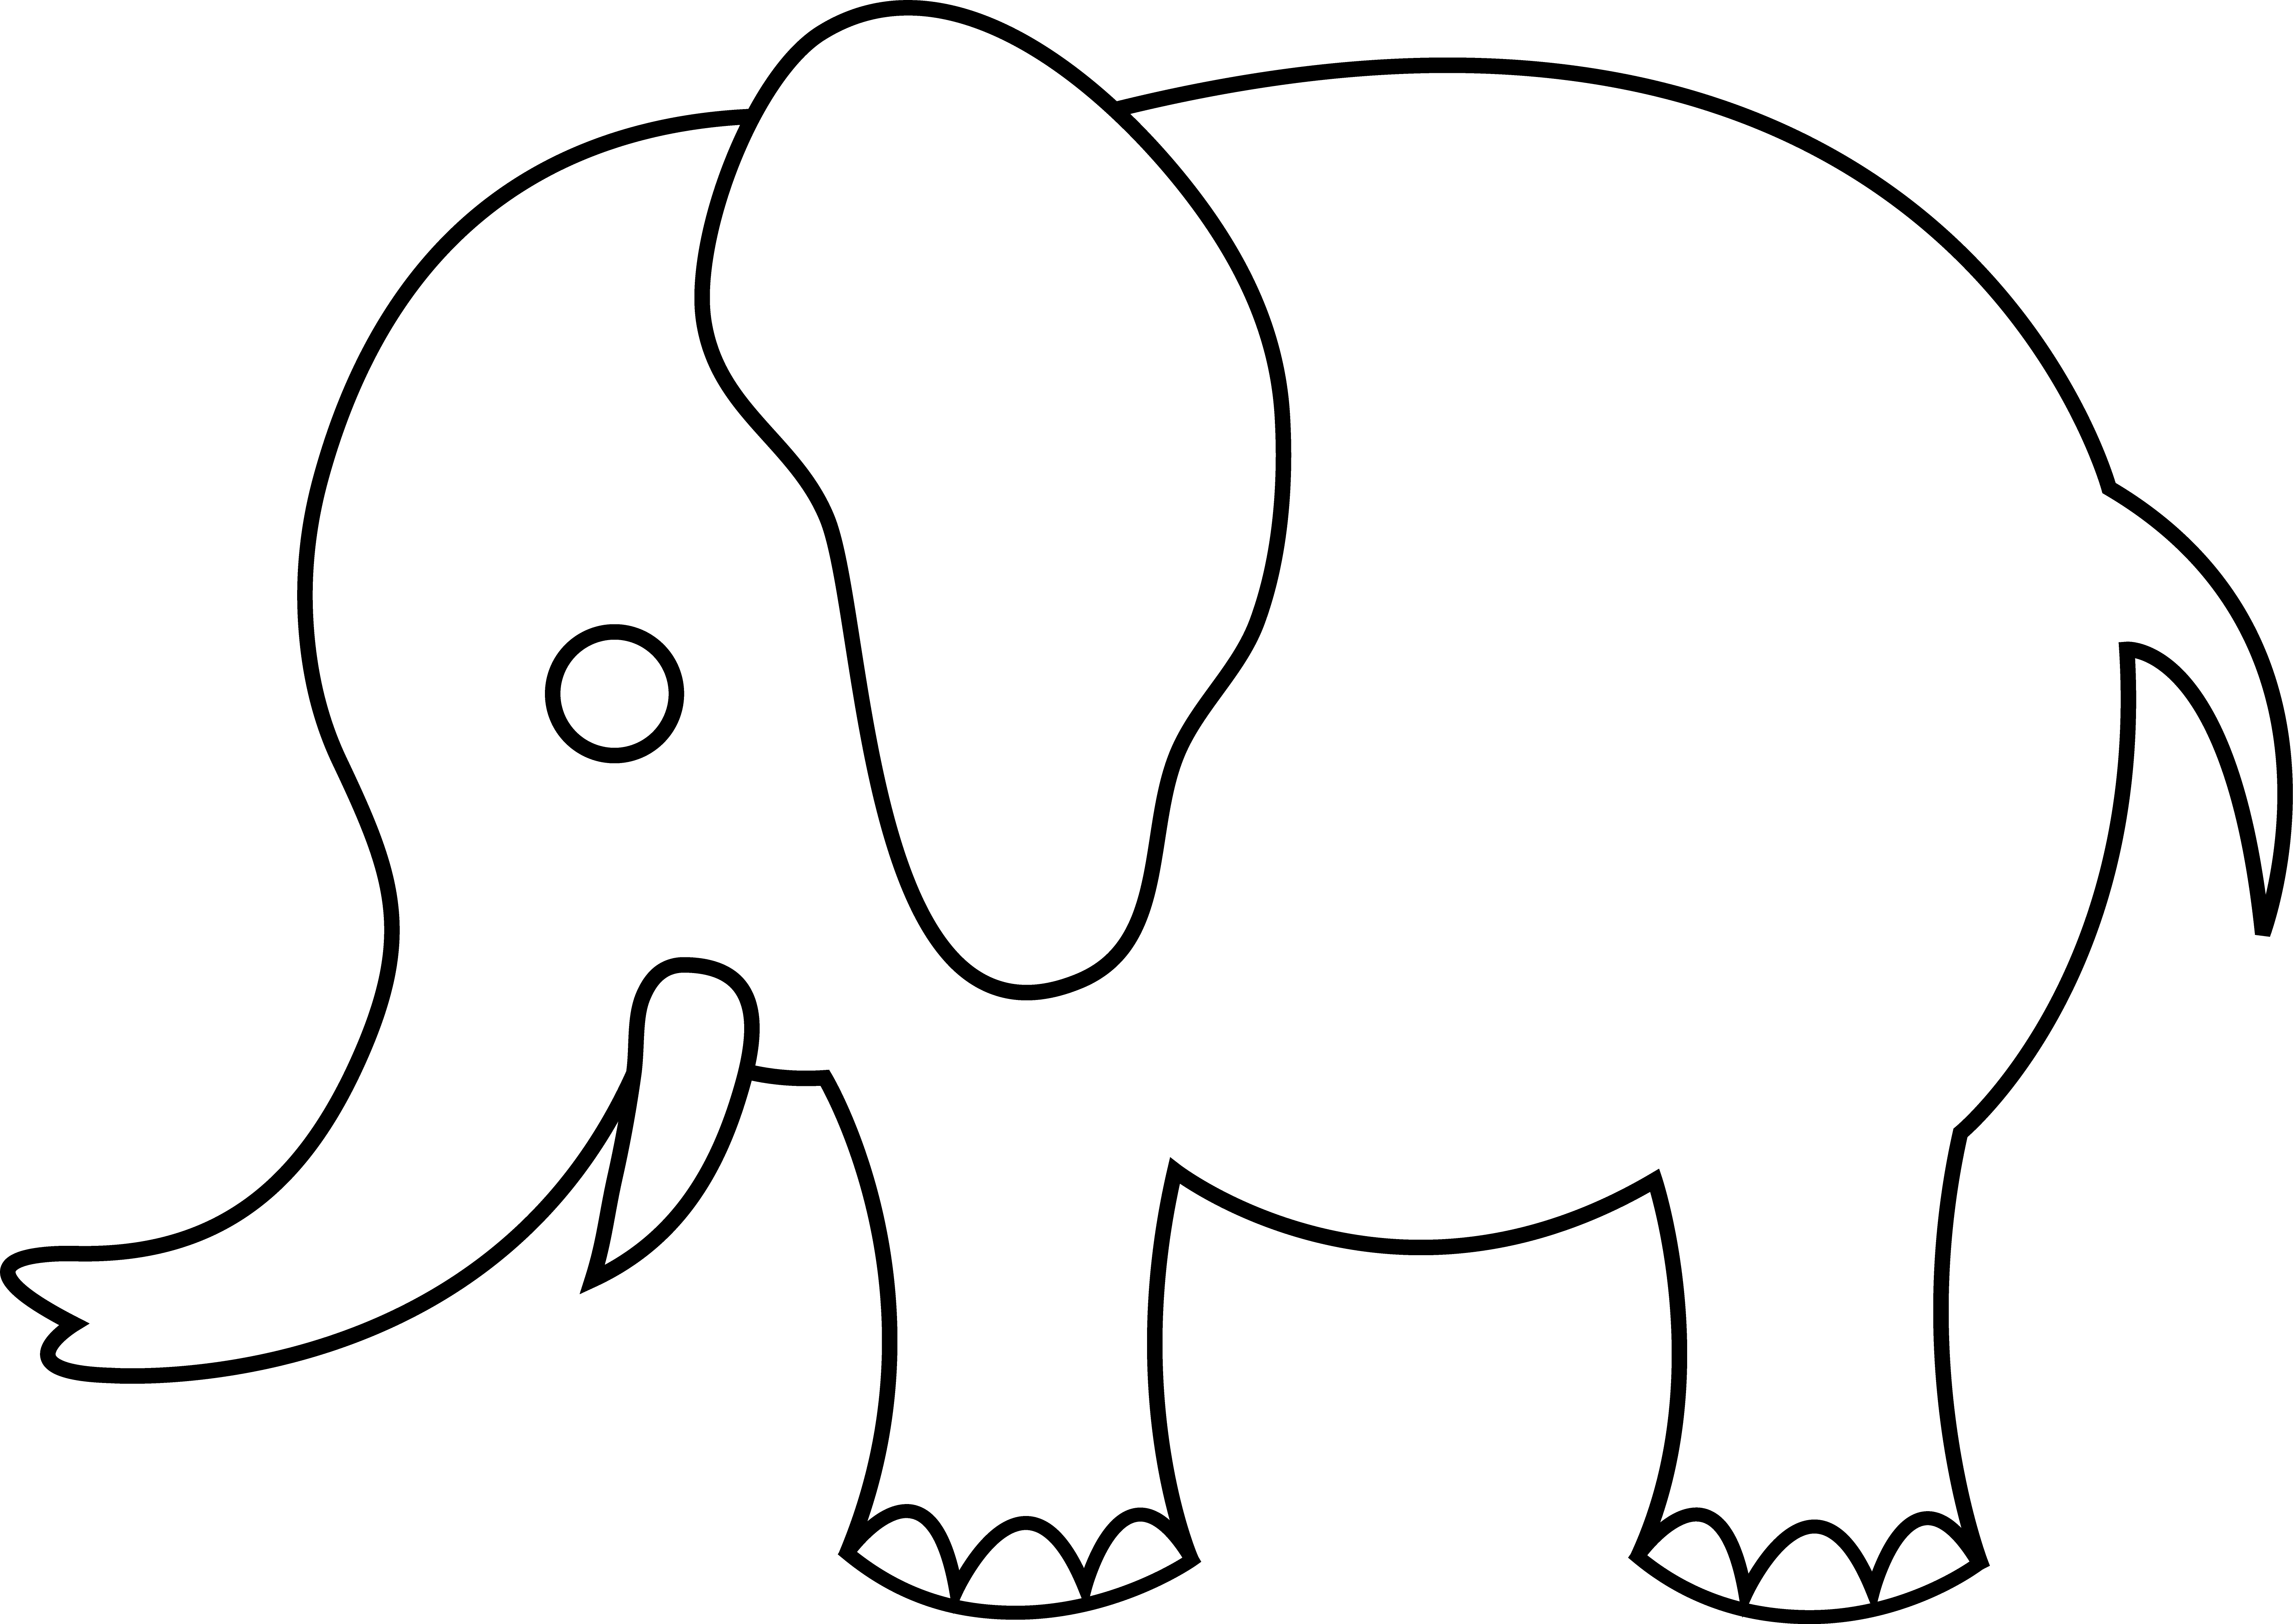 Simple Elephant Outline